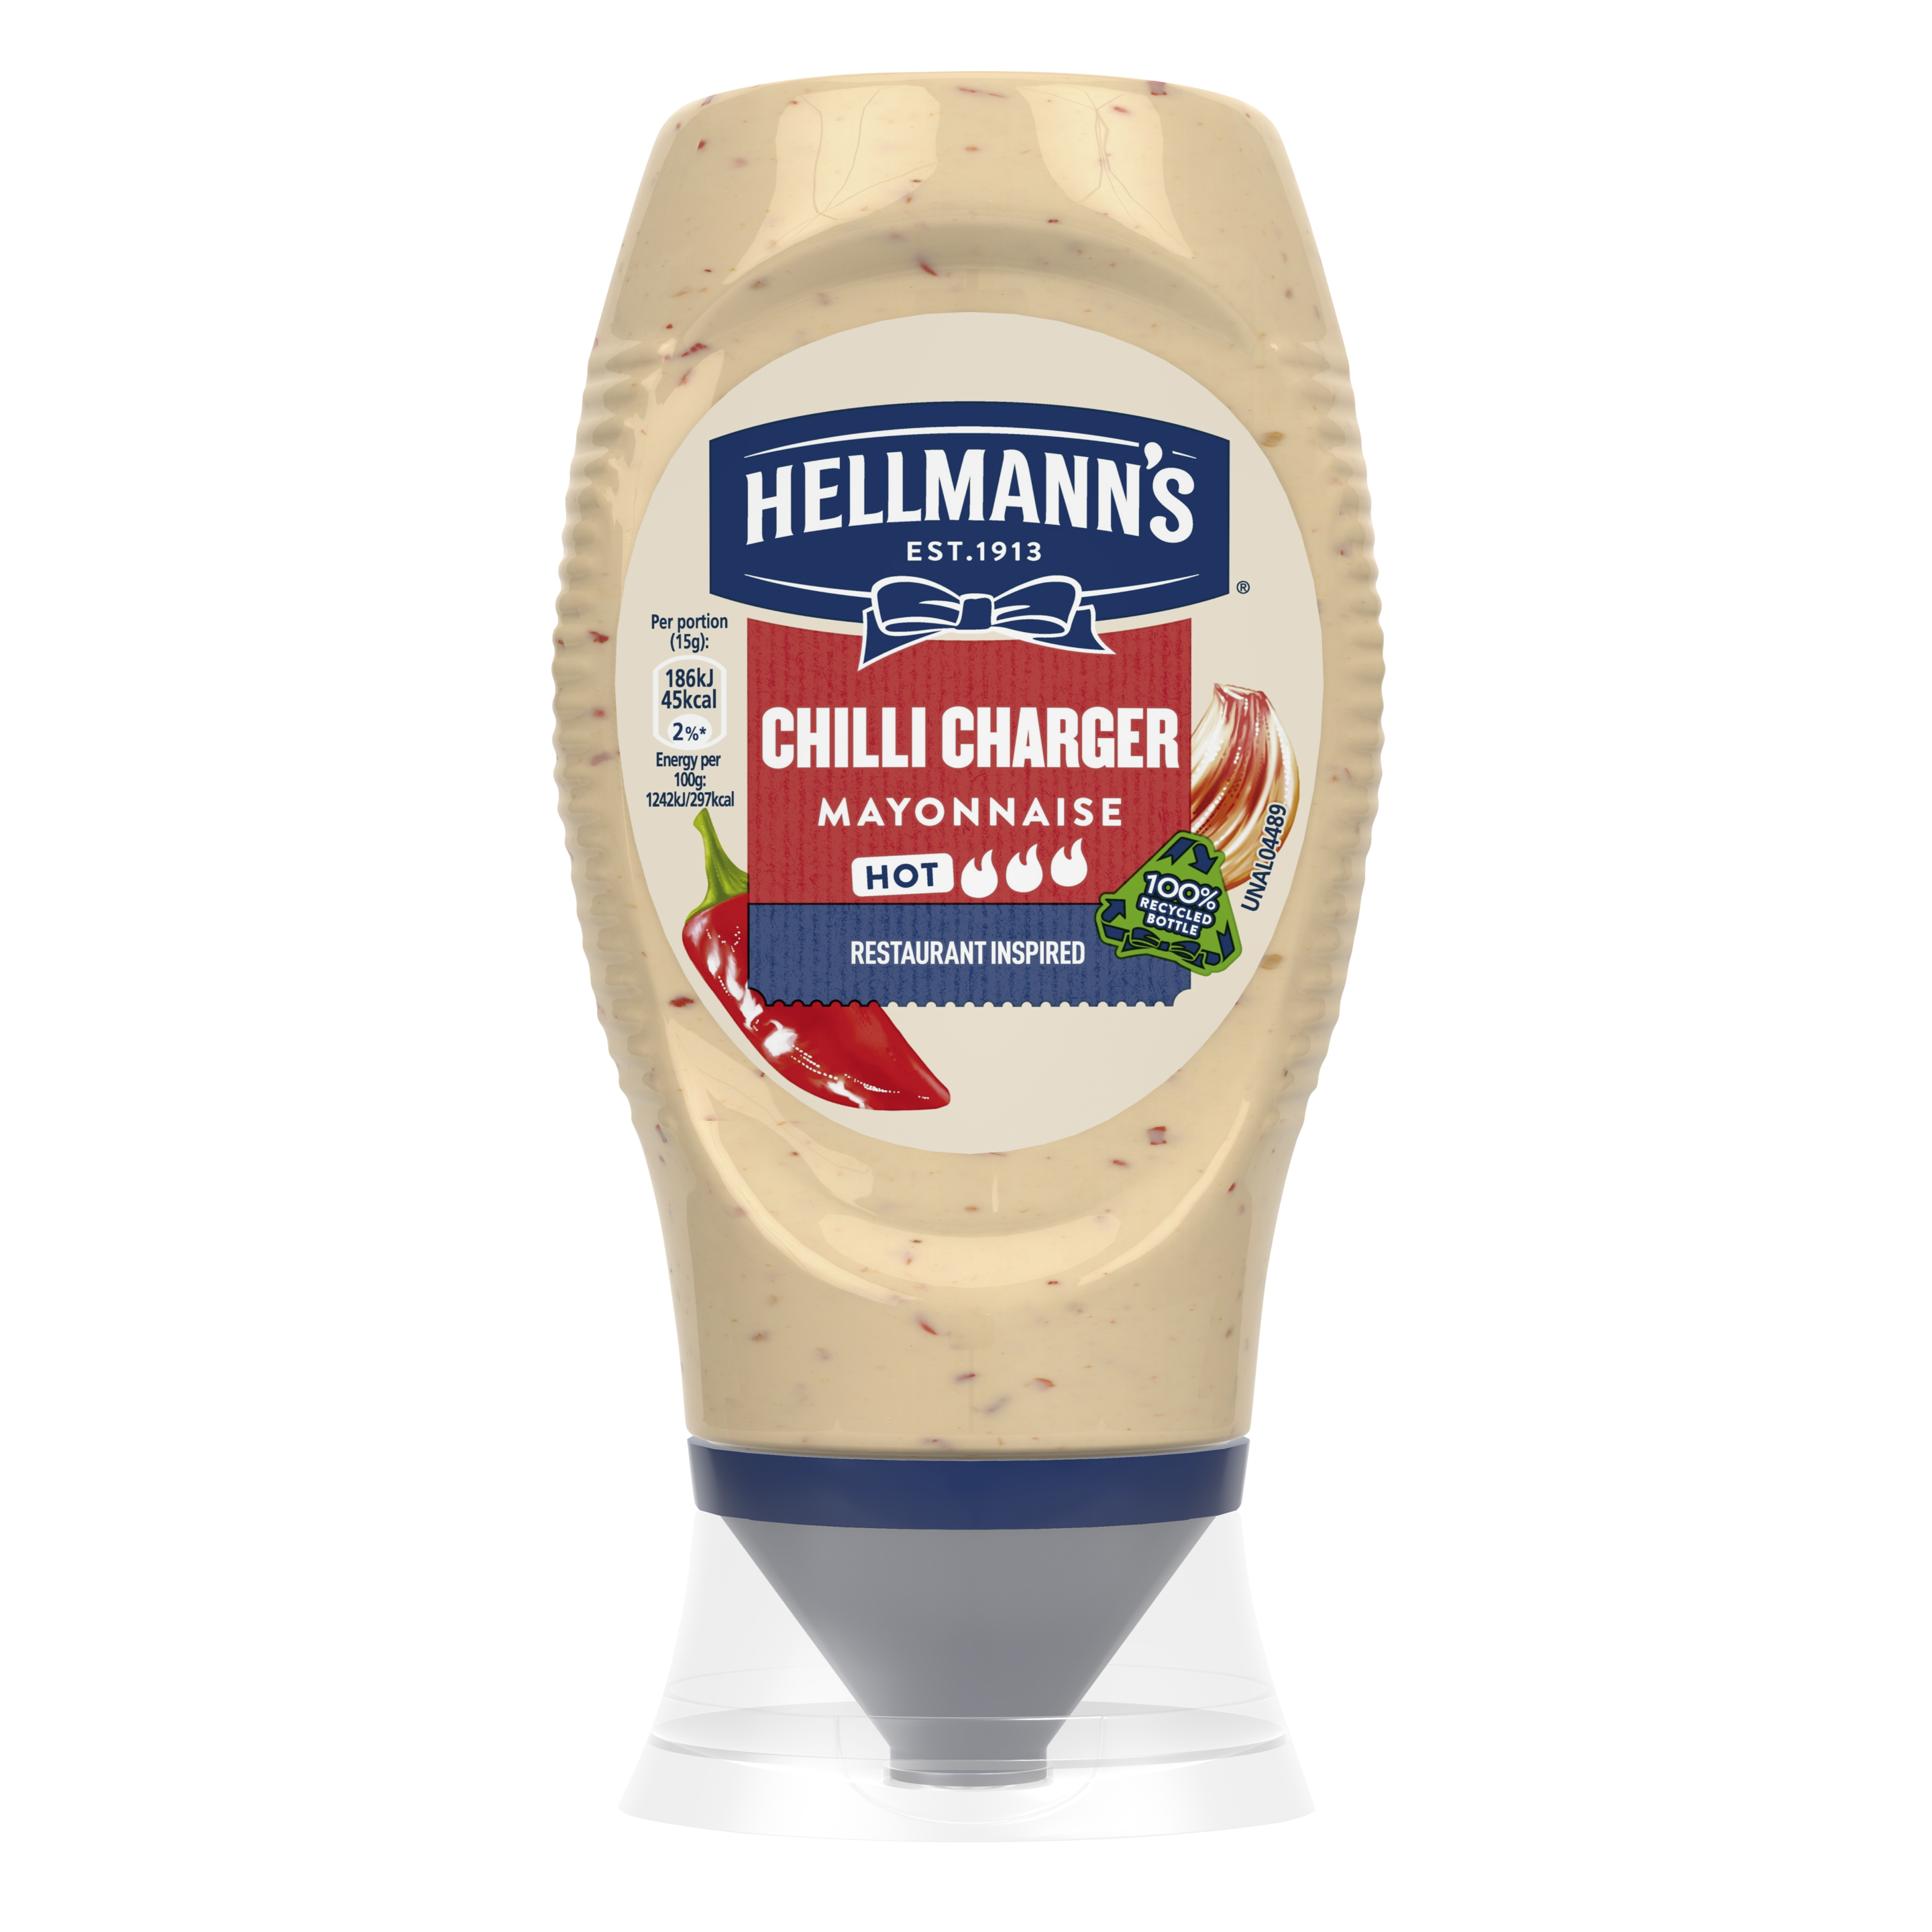 Hellmann’s Chilli Charger Mayonnaise 250ml